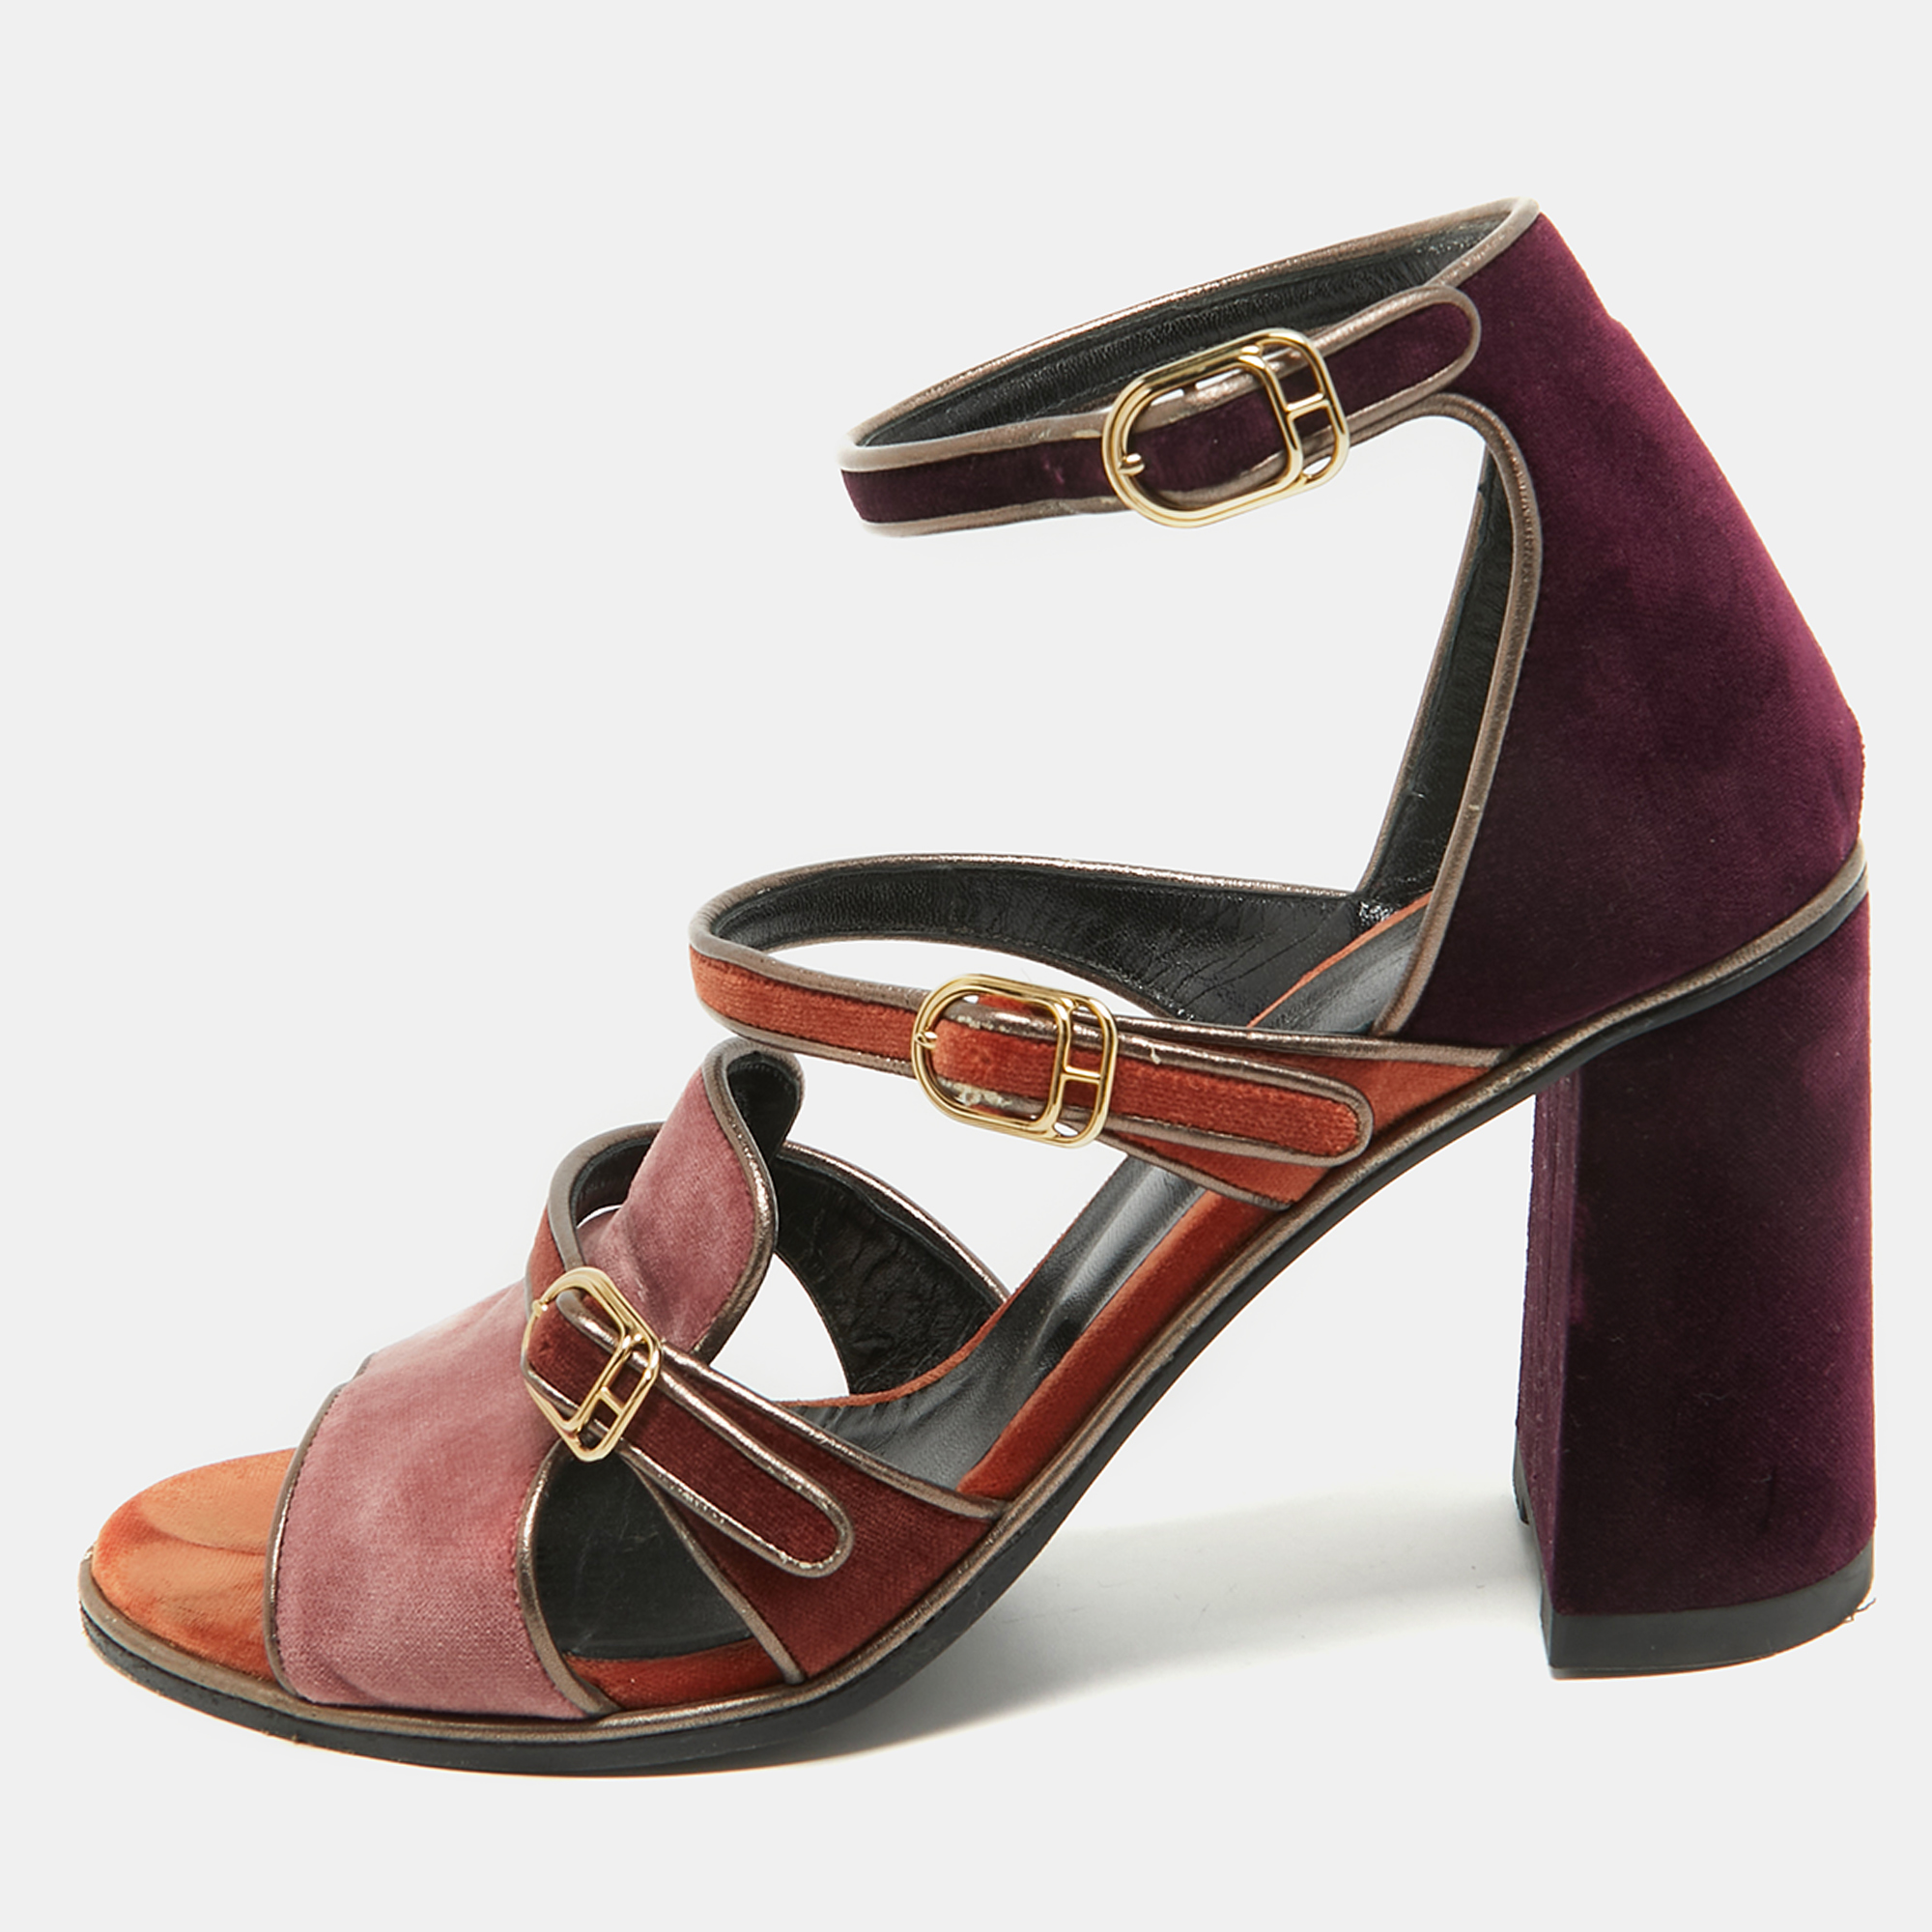 Hermes multicolor velvet ankle strap sandals size 39